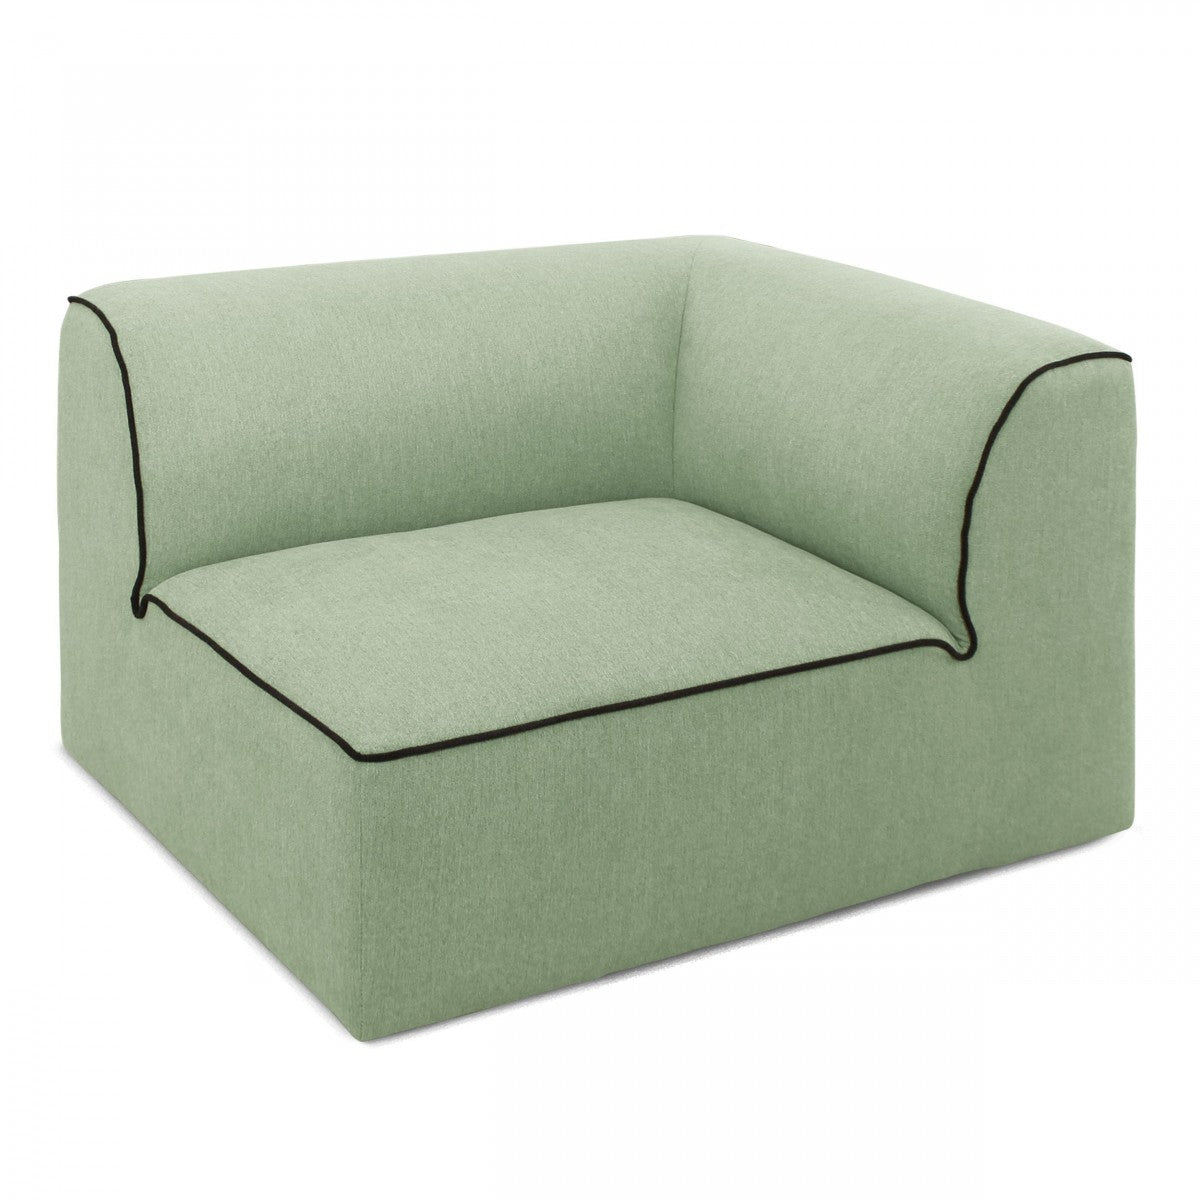 Divani Casa Polo - Modern Green + Blue + Grey Fabric Modular Sectional Sofa